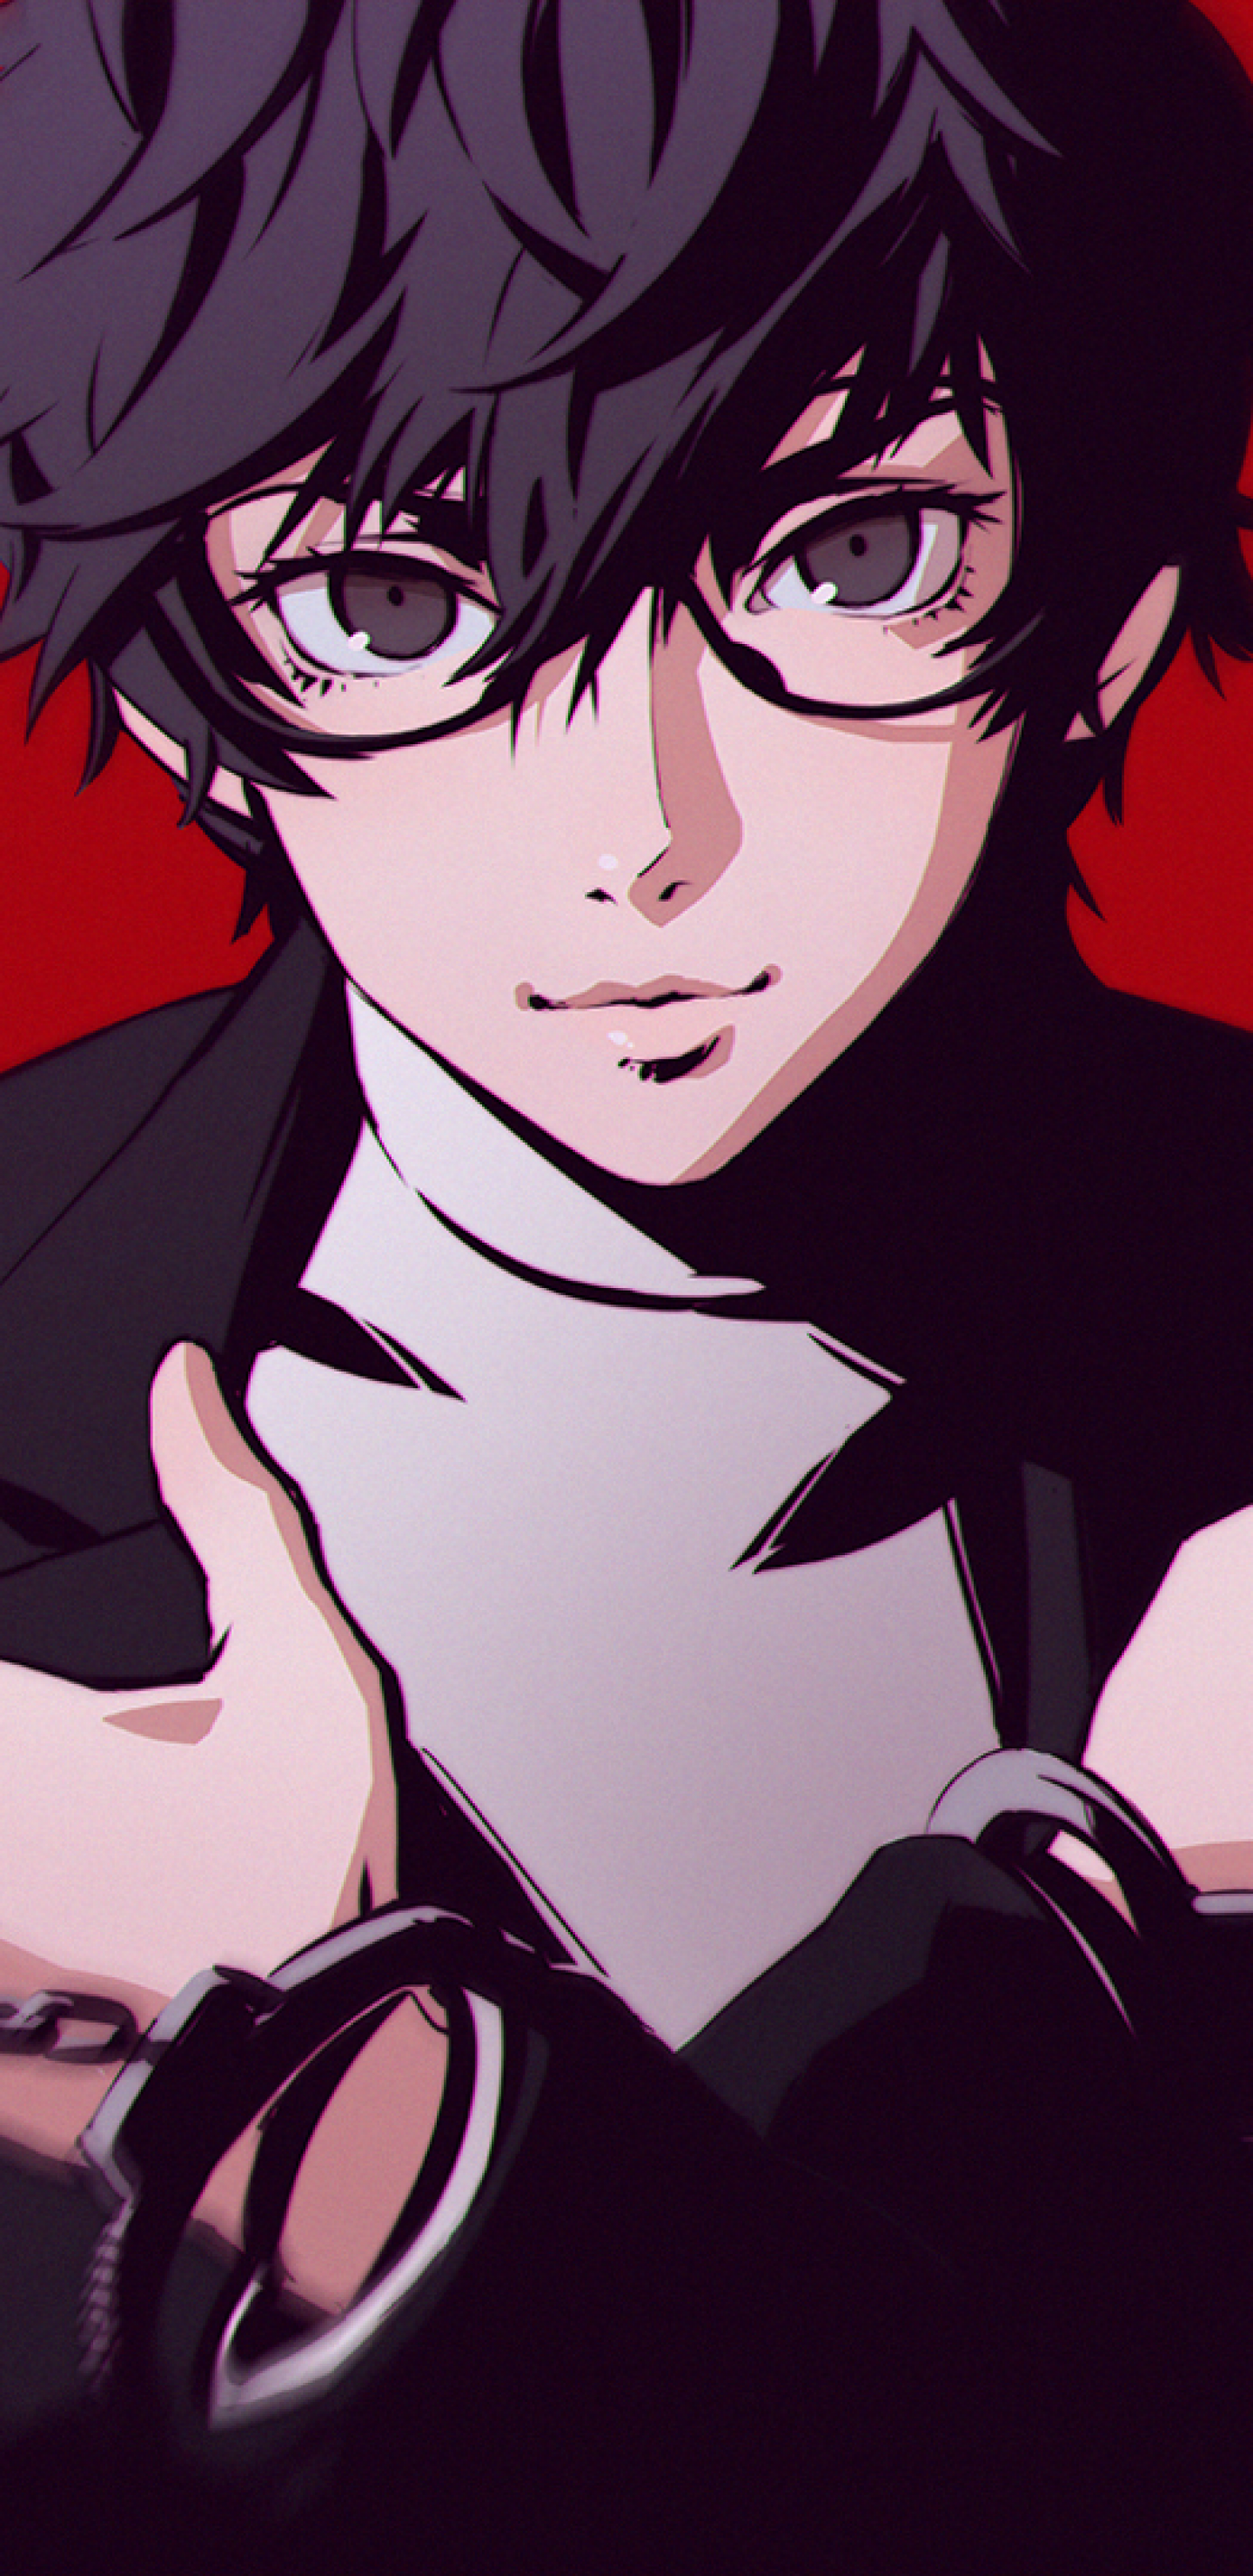 HD wallpaper: persona 5, kurusu akira, anime boy, cat, glasses, profile  view